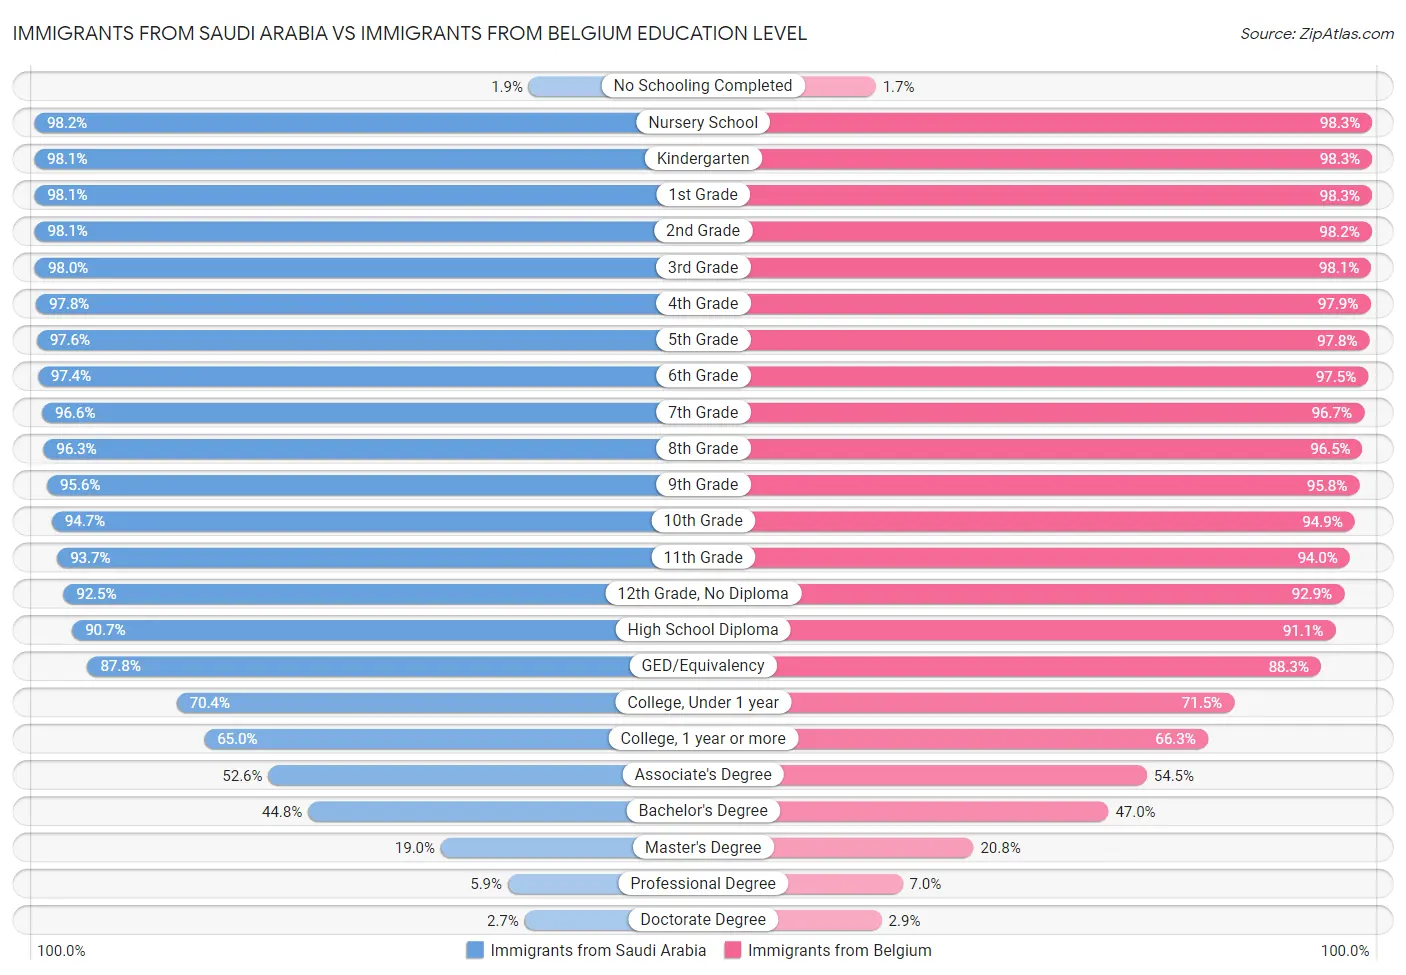 Immigrants from Saudi Arabia vs Immigrants from Belgium Education Level